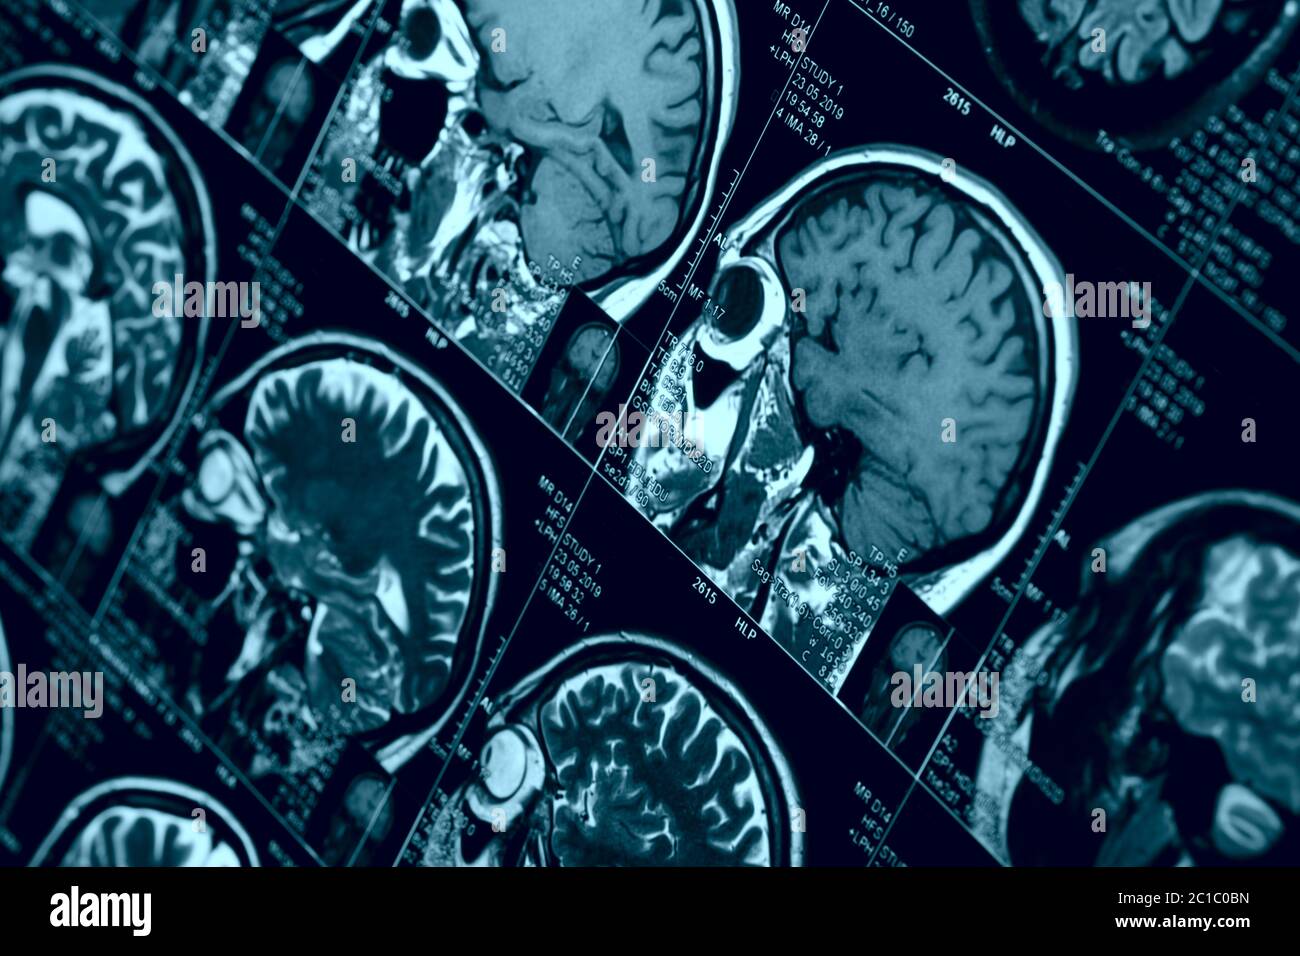 MRI scan of human brain, toned image Stock Photo